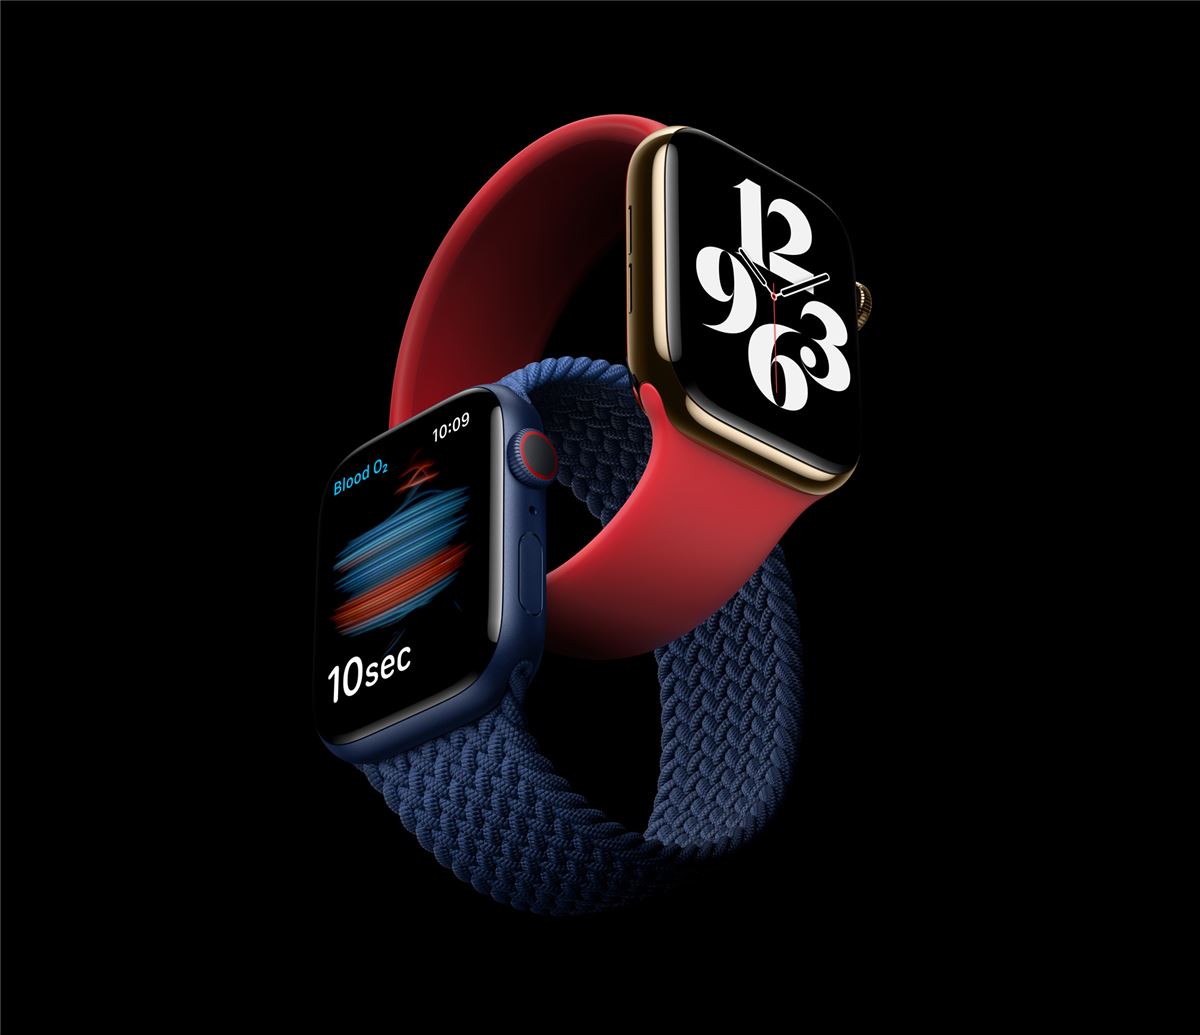 Get Apple Watch Series 6 / SE today - 1